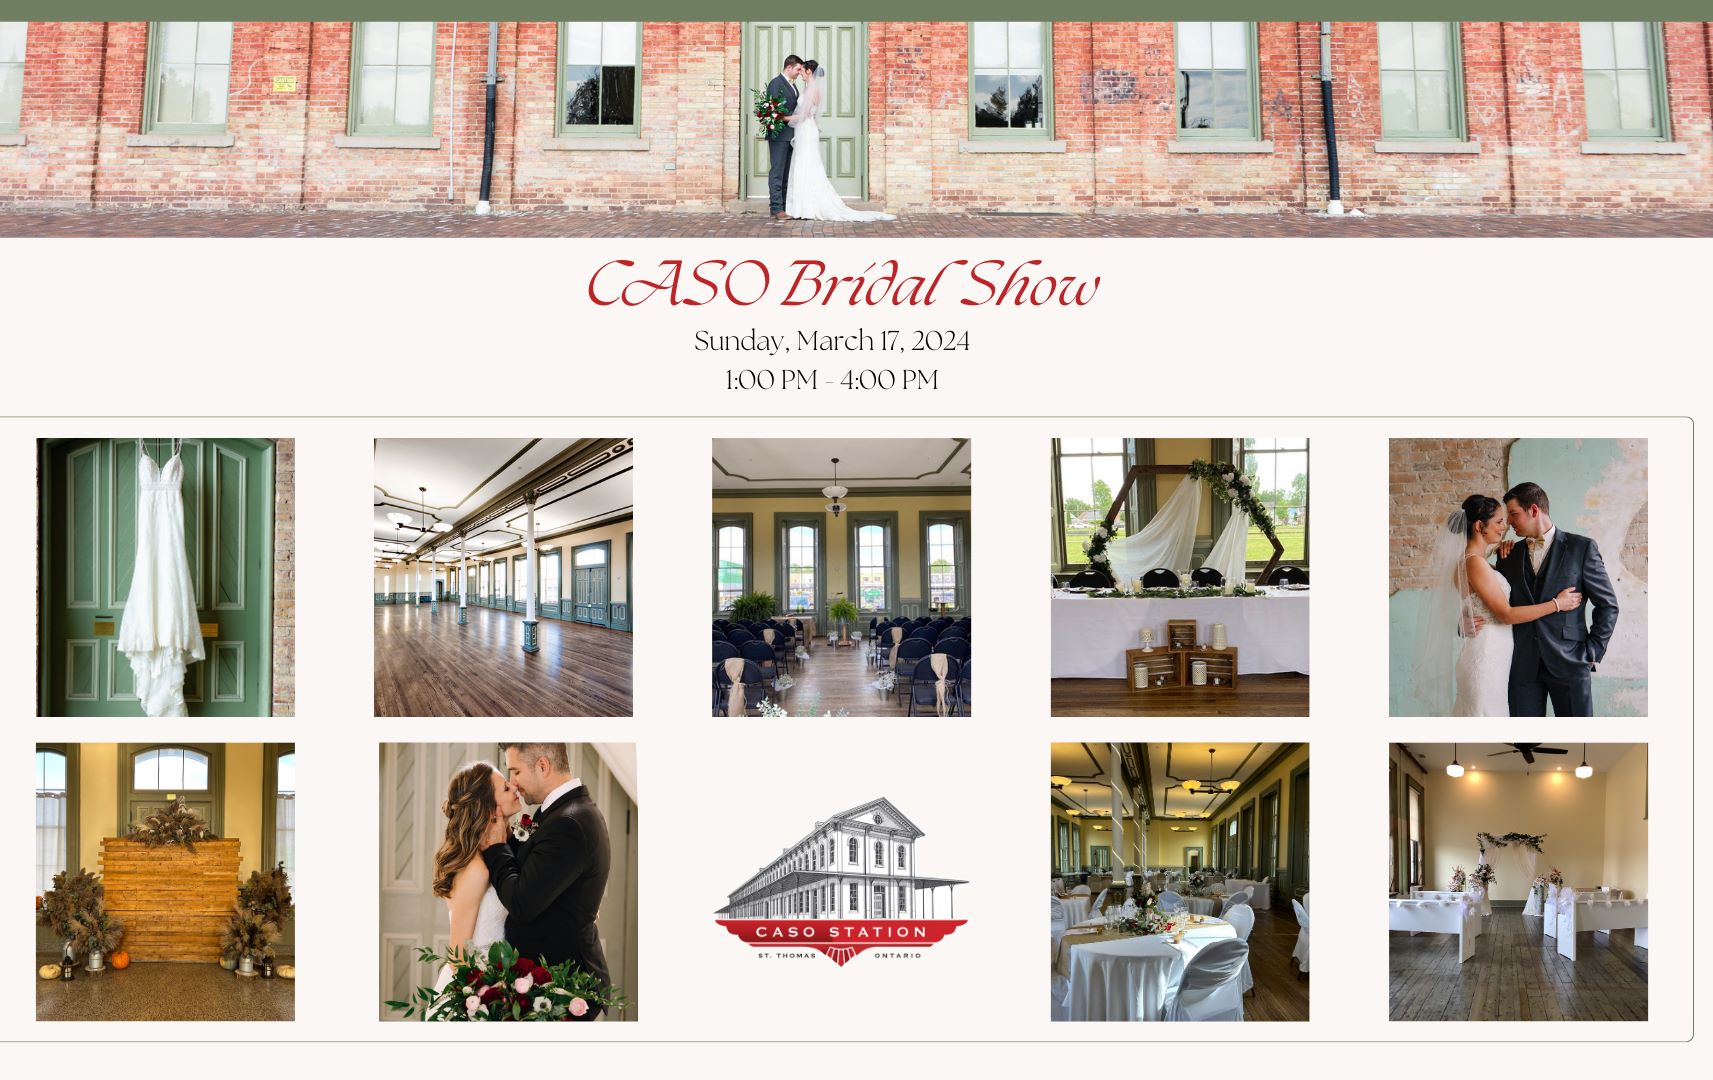 CASO Bridal Show 2024 